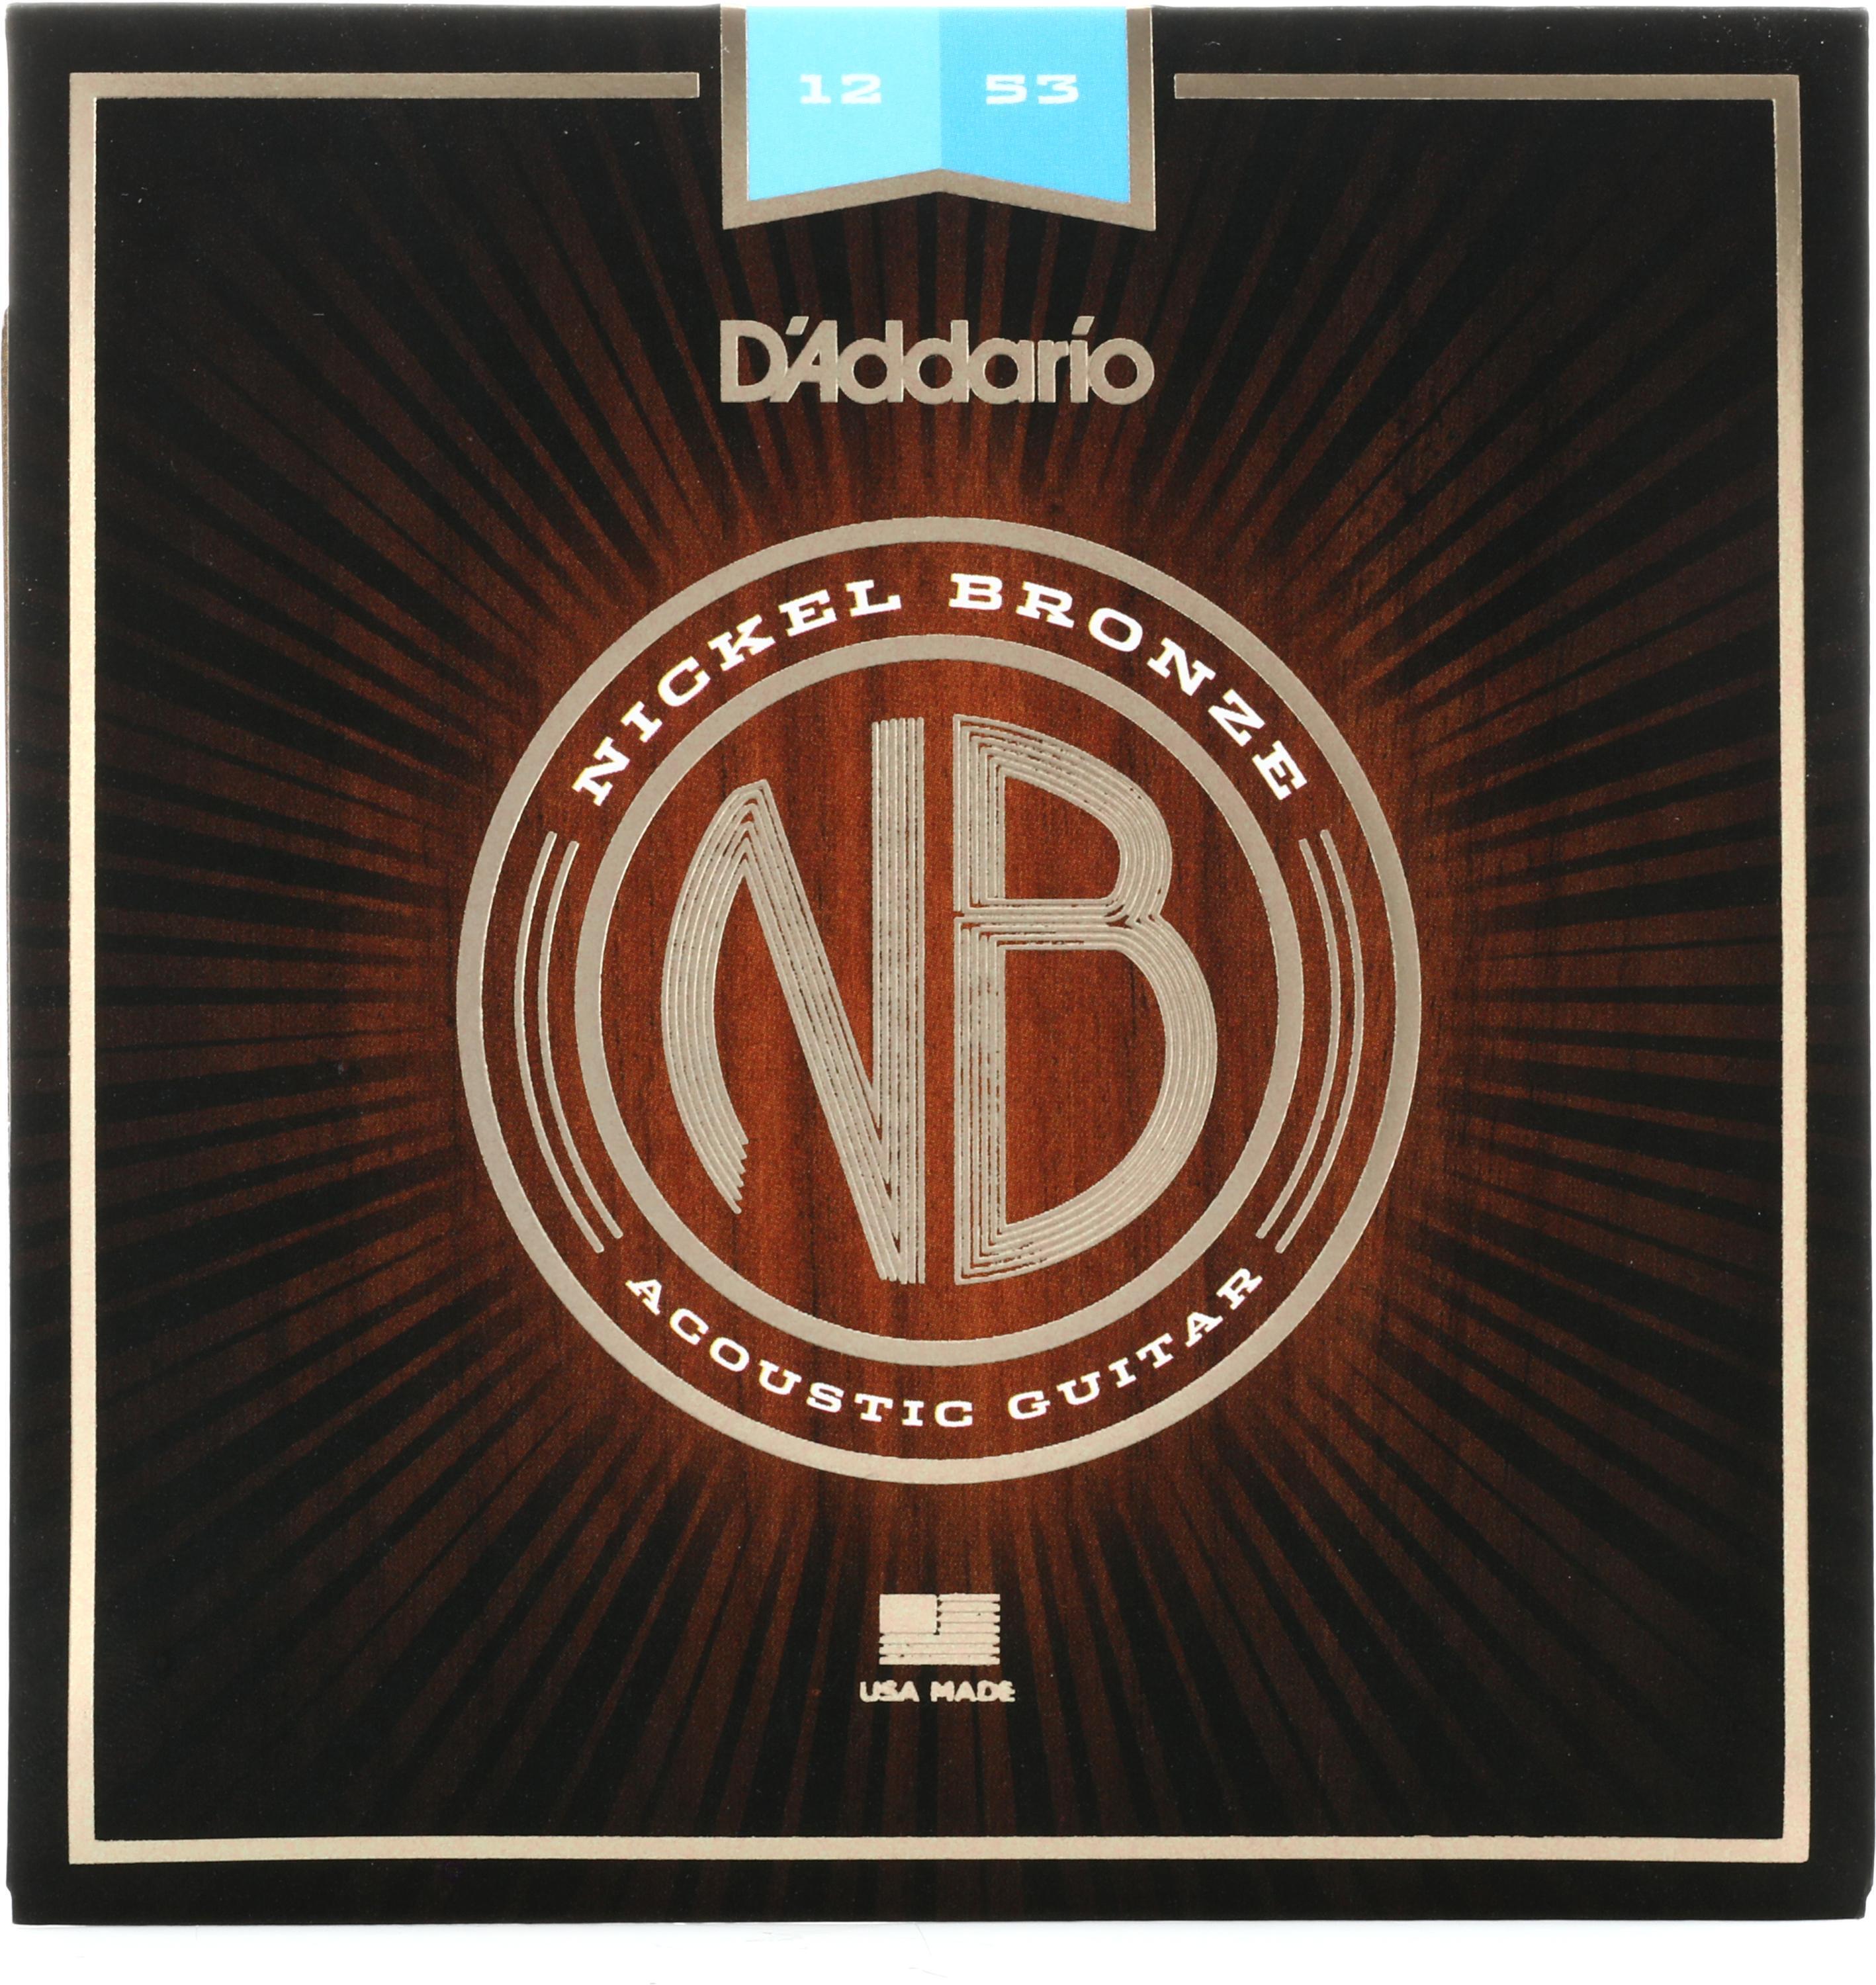 D'Addario NB1253 Nickel Bronze Acoustic Guitar Strings - .012-.053 Light